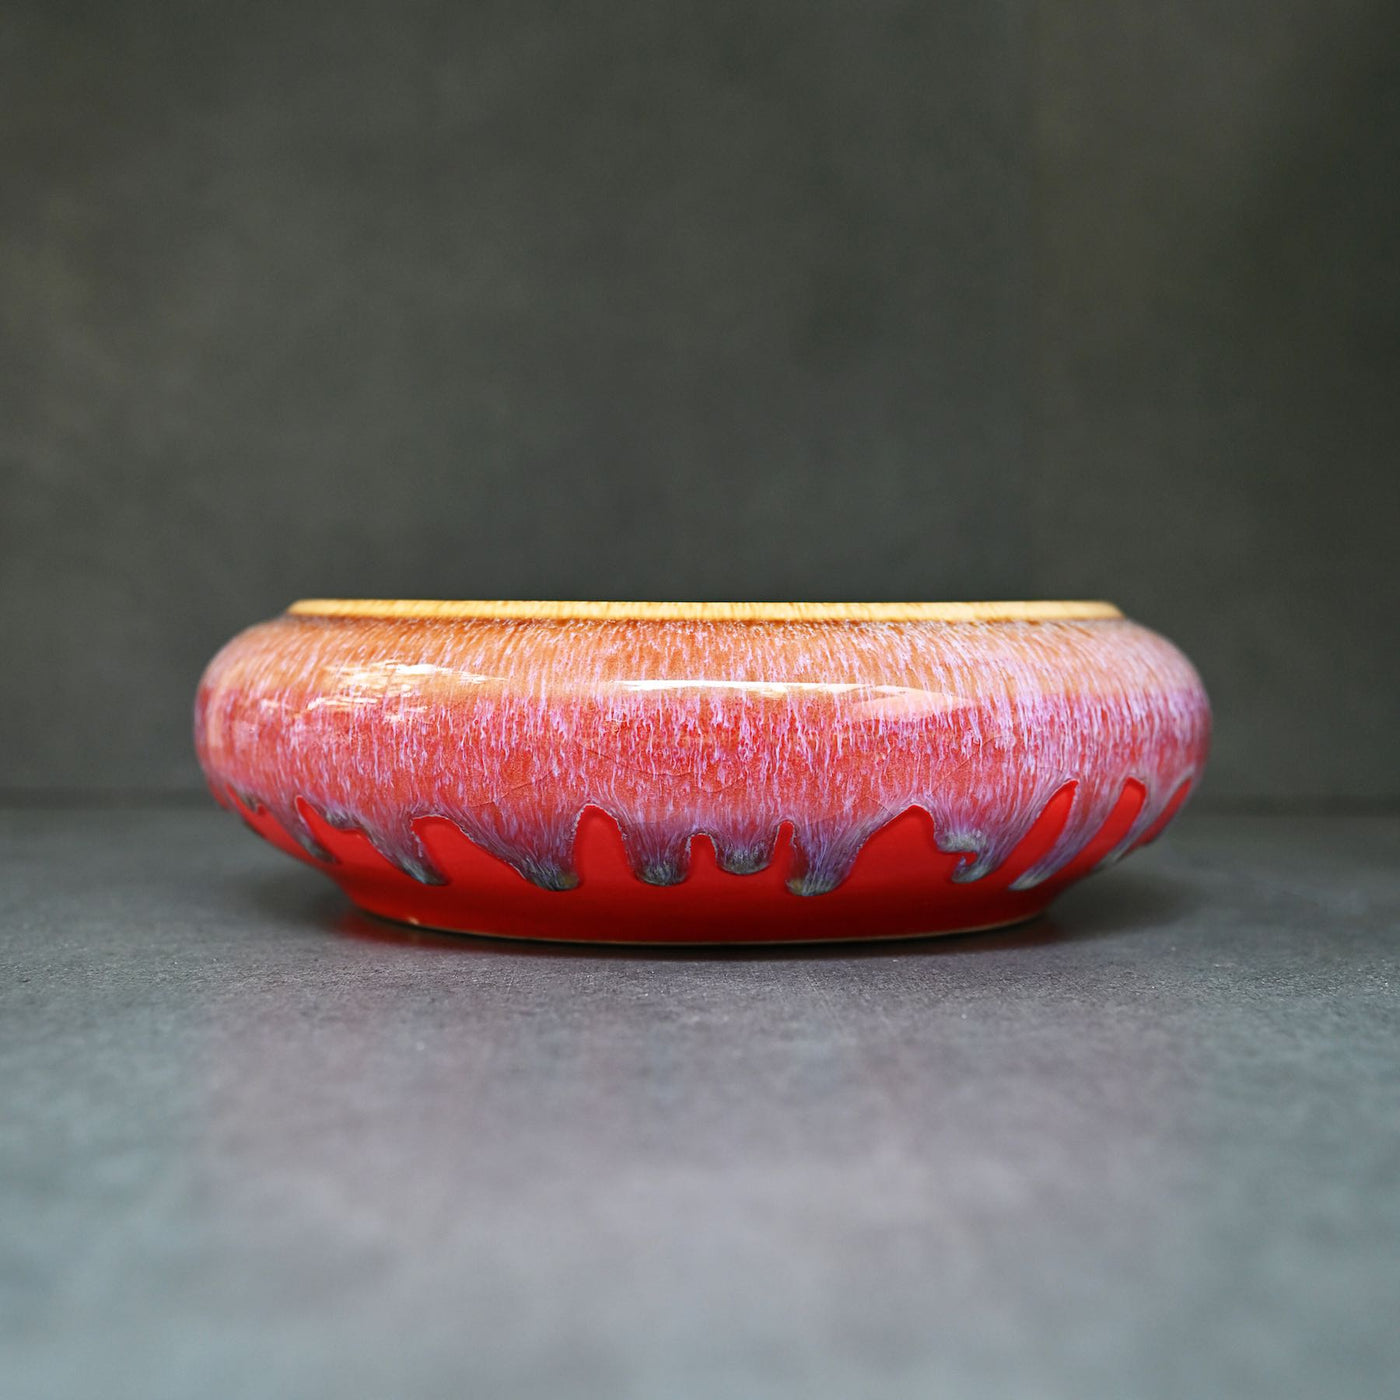 red ceramic bowl